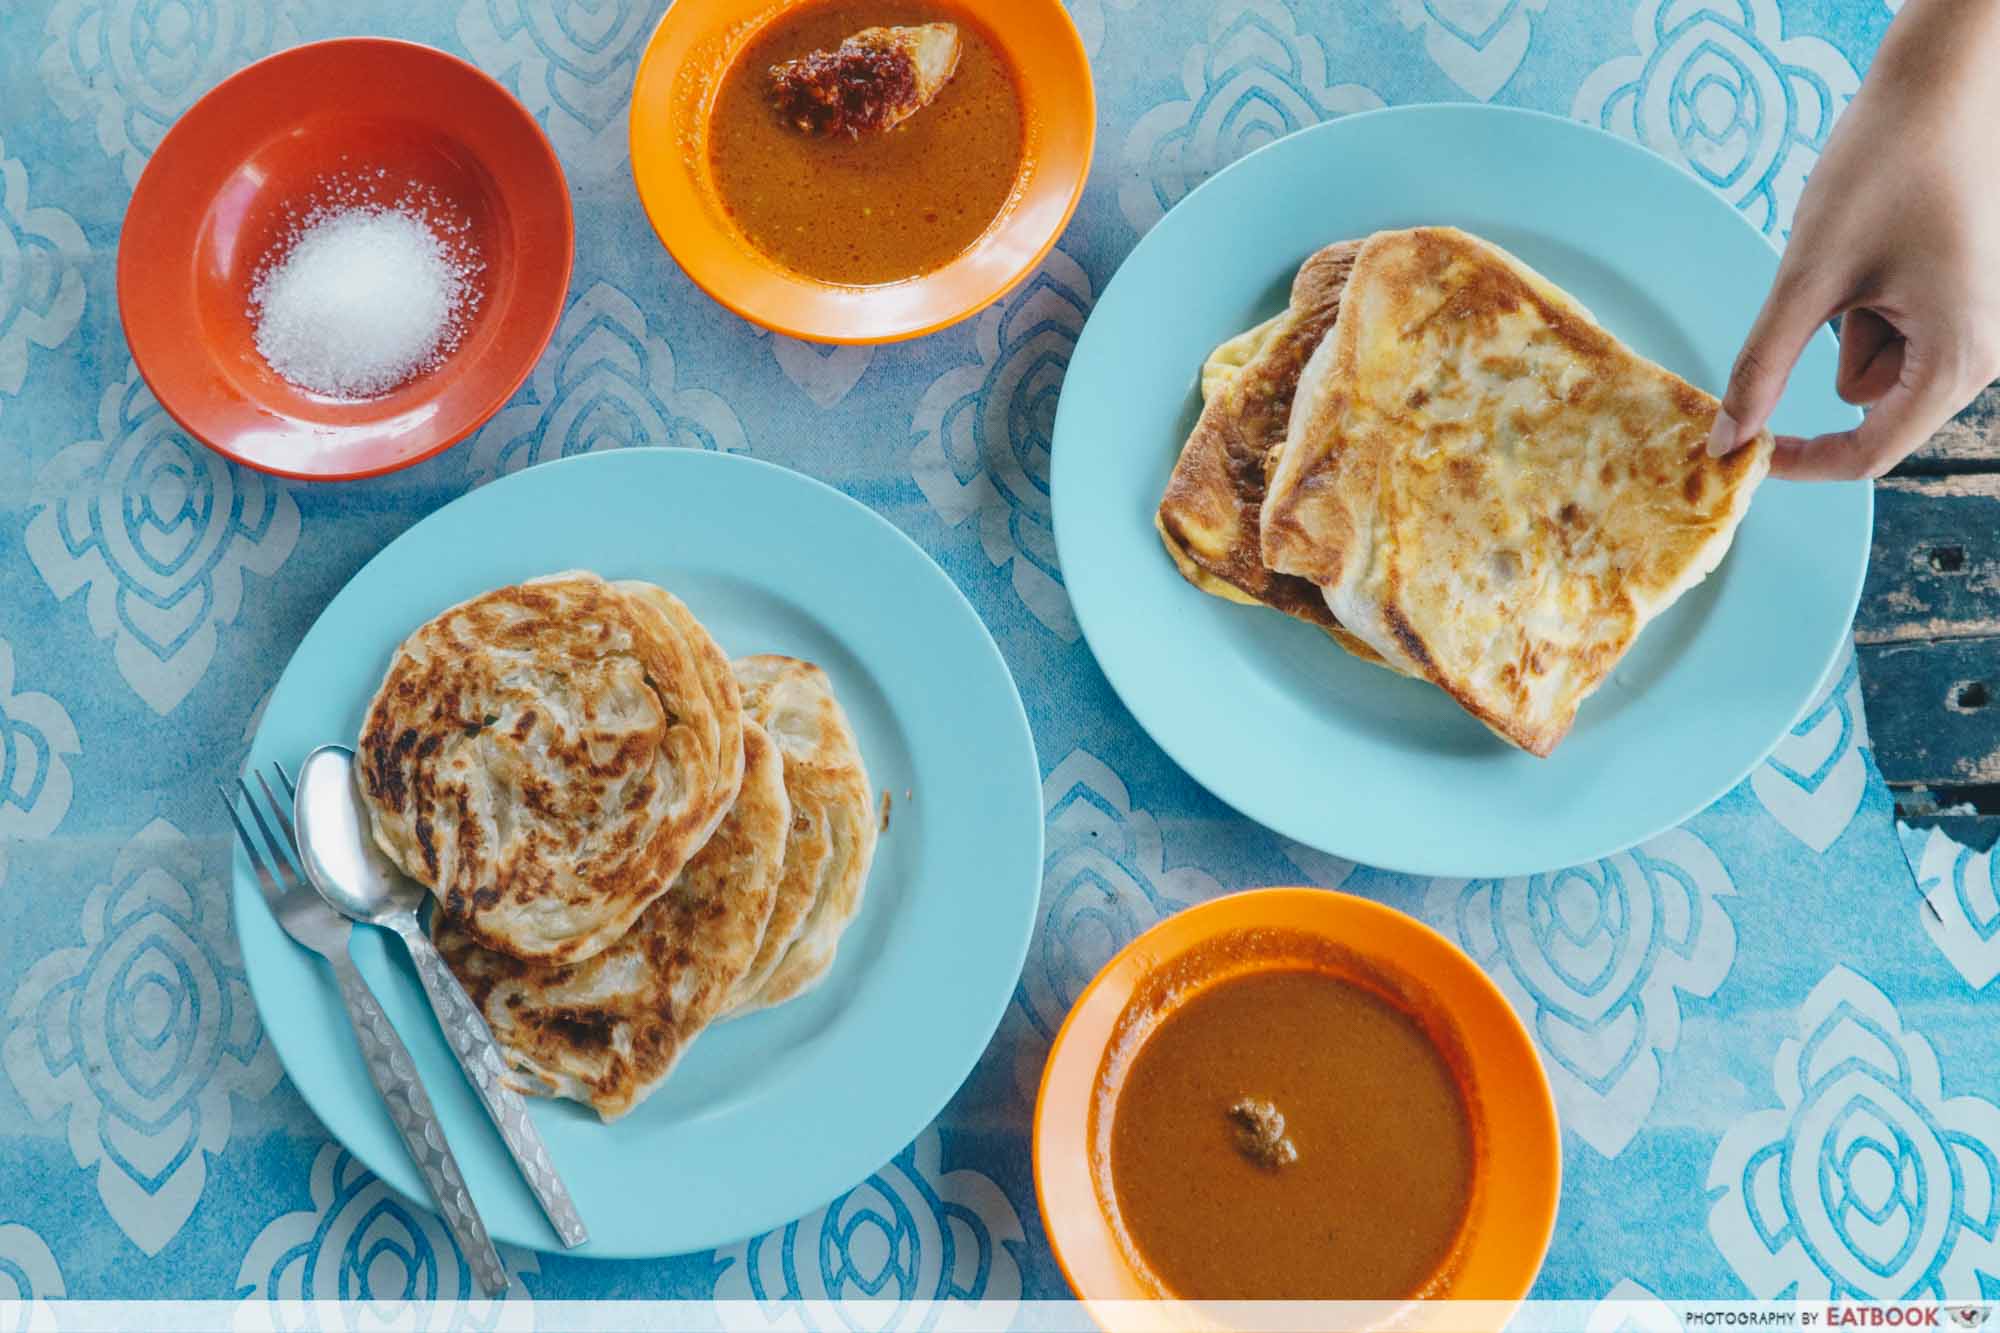 Johor Bahru Hawker Food - Roti Canai